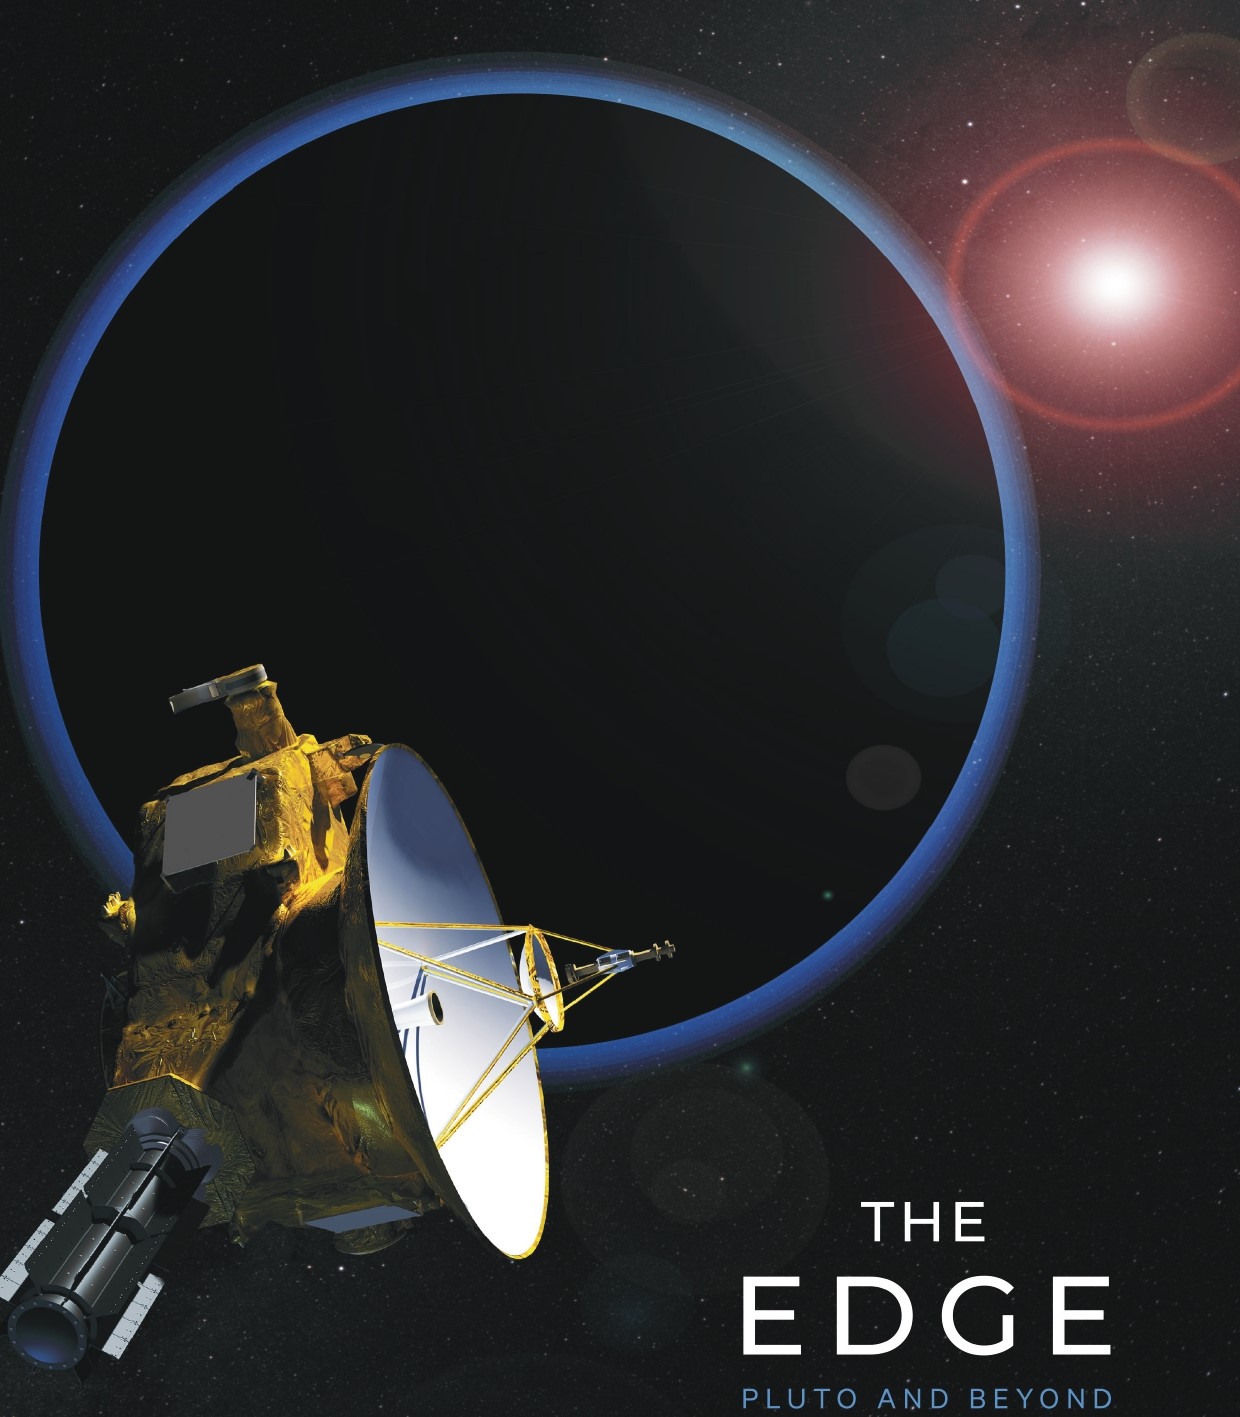 Poster for The Edge planetarium show